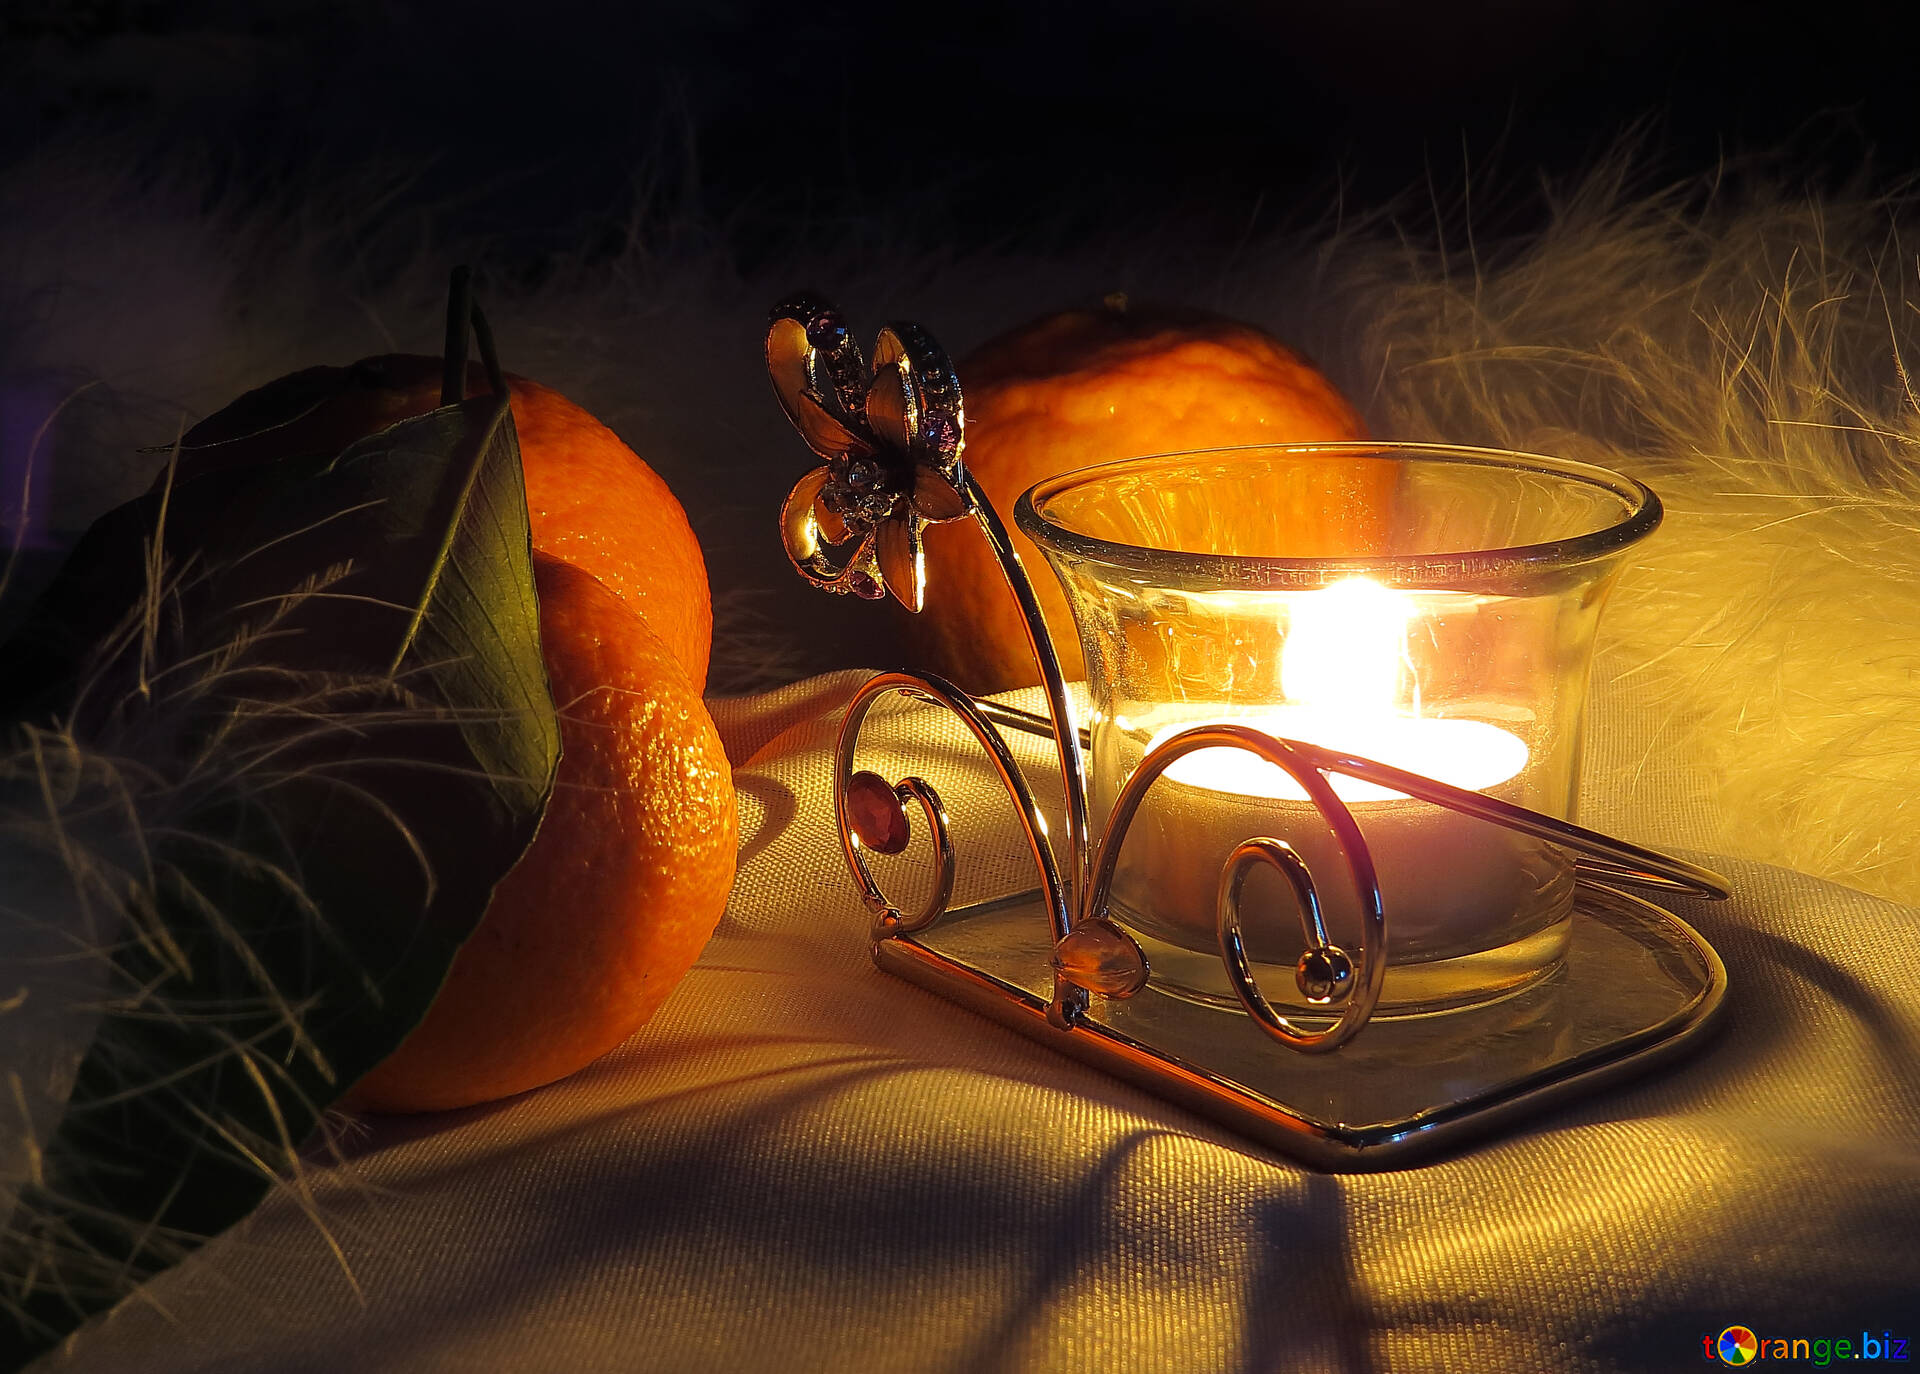 Sera natura morta immagine sera d'inverno lume di candela immagines vino №  15200 | torange.biz